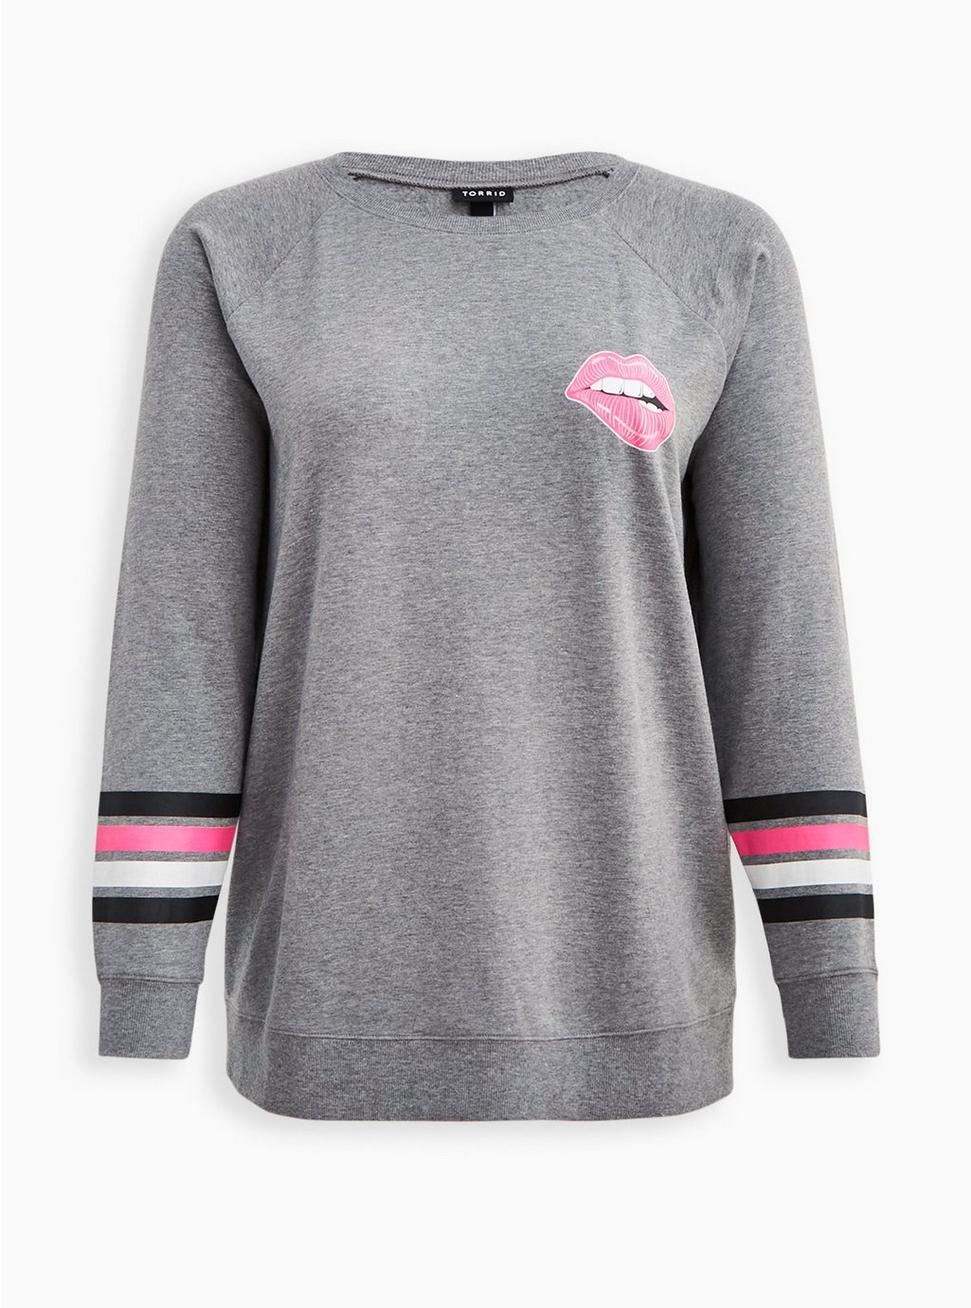 Relaxed Fit Raglan Sweatshirt - Ultra Soft Fleece Pink Lips Heather Grey, MEDIUM HEATHER GREY, hi-res